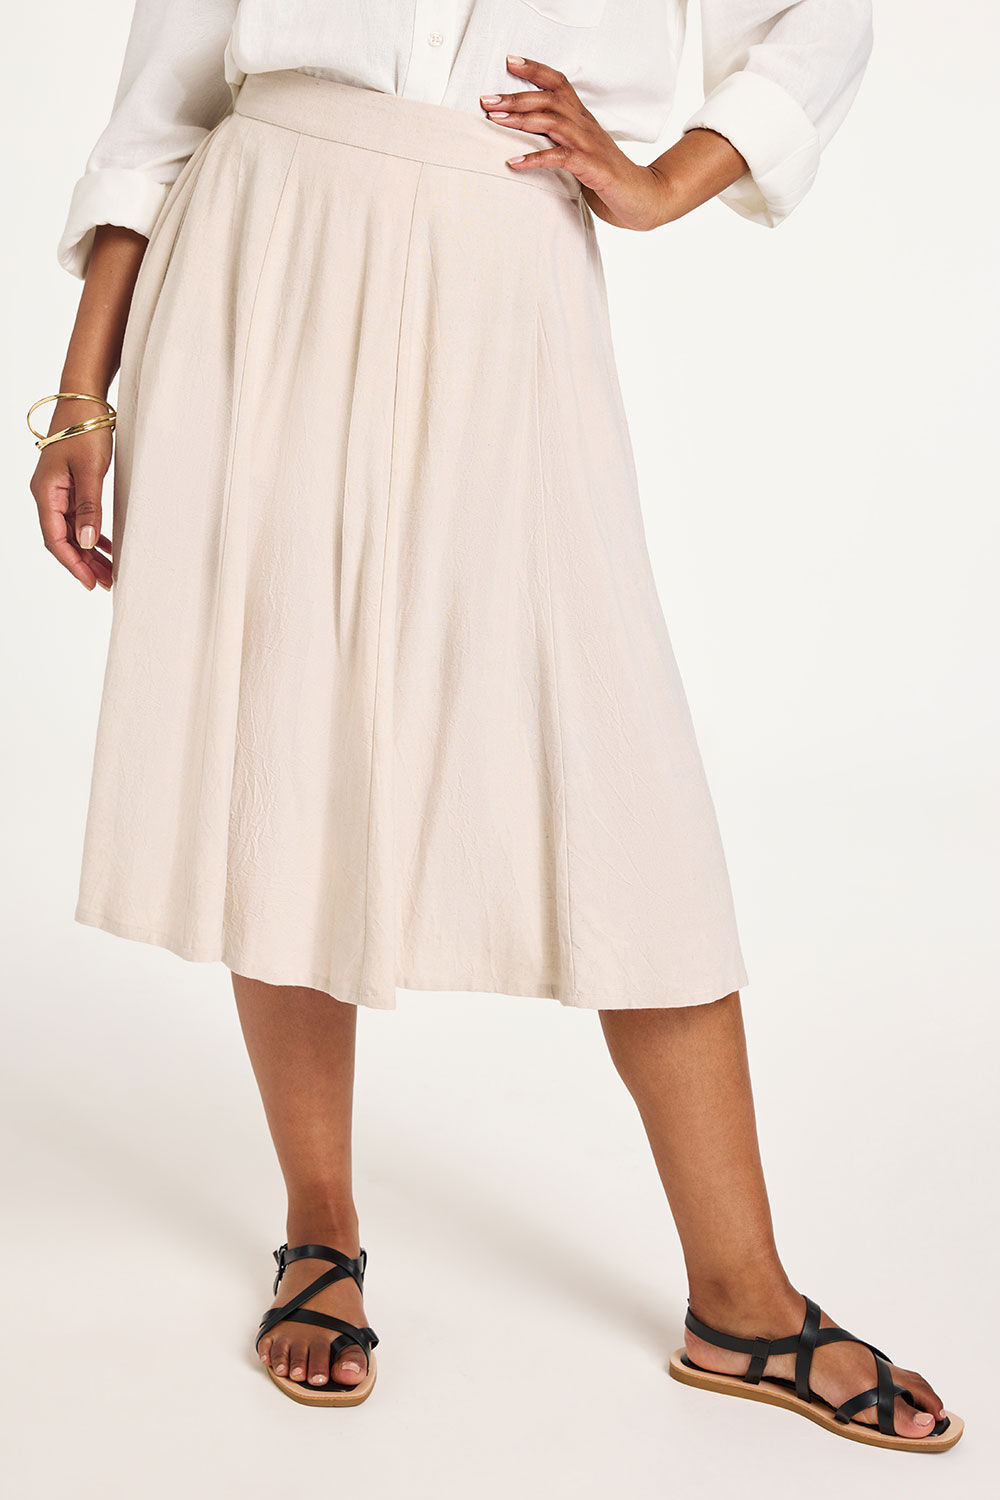 Bonmarche Stone Plain Flippy Skirt, Size: 14